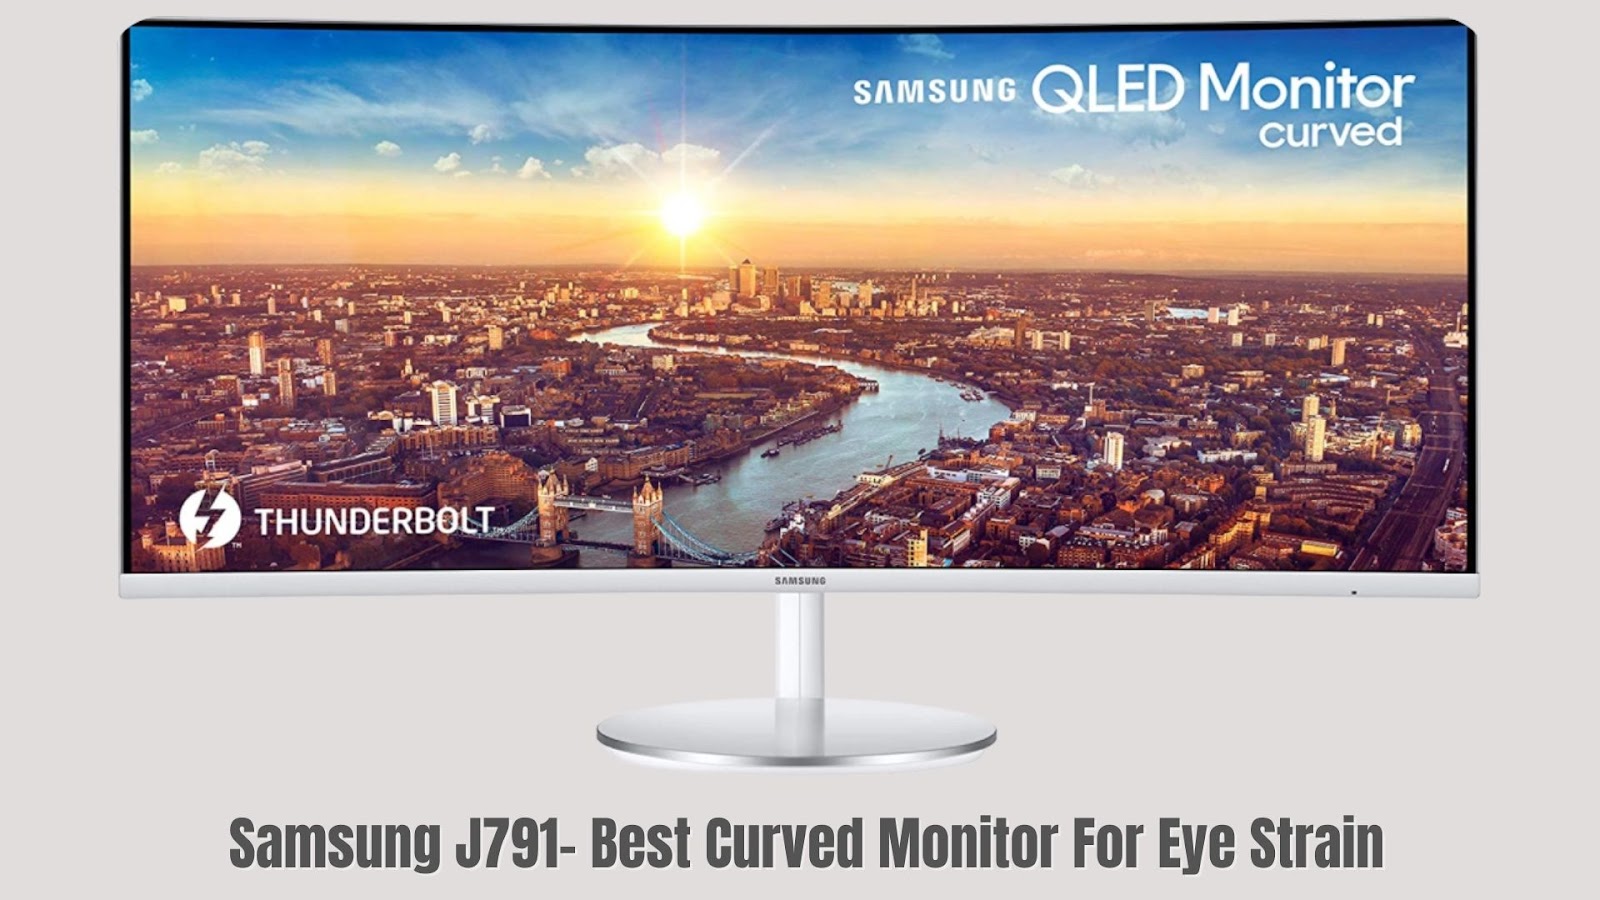 Samsung J791– Best Curved Monitor For Eye Strain